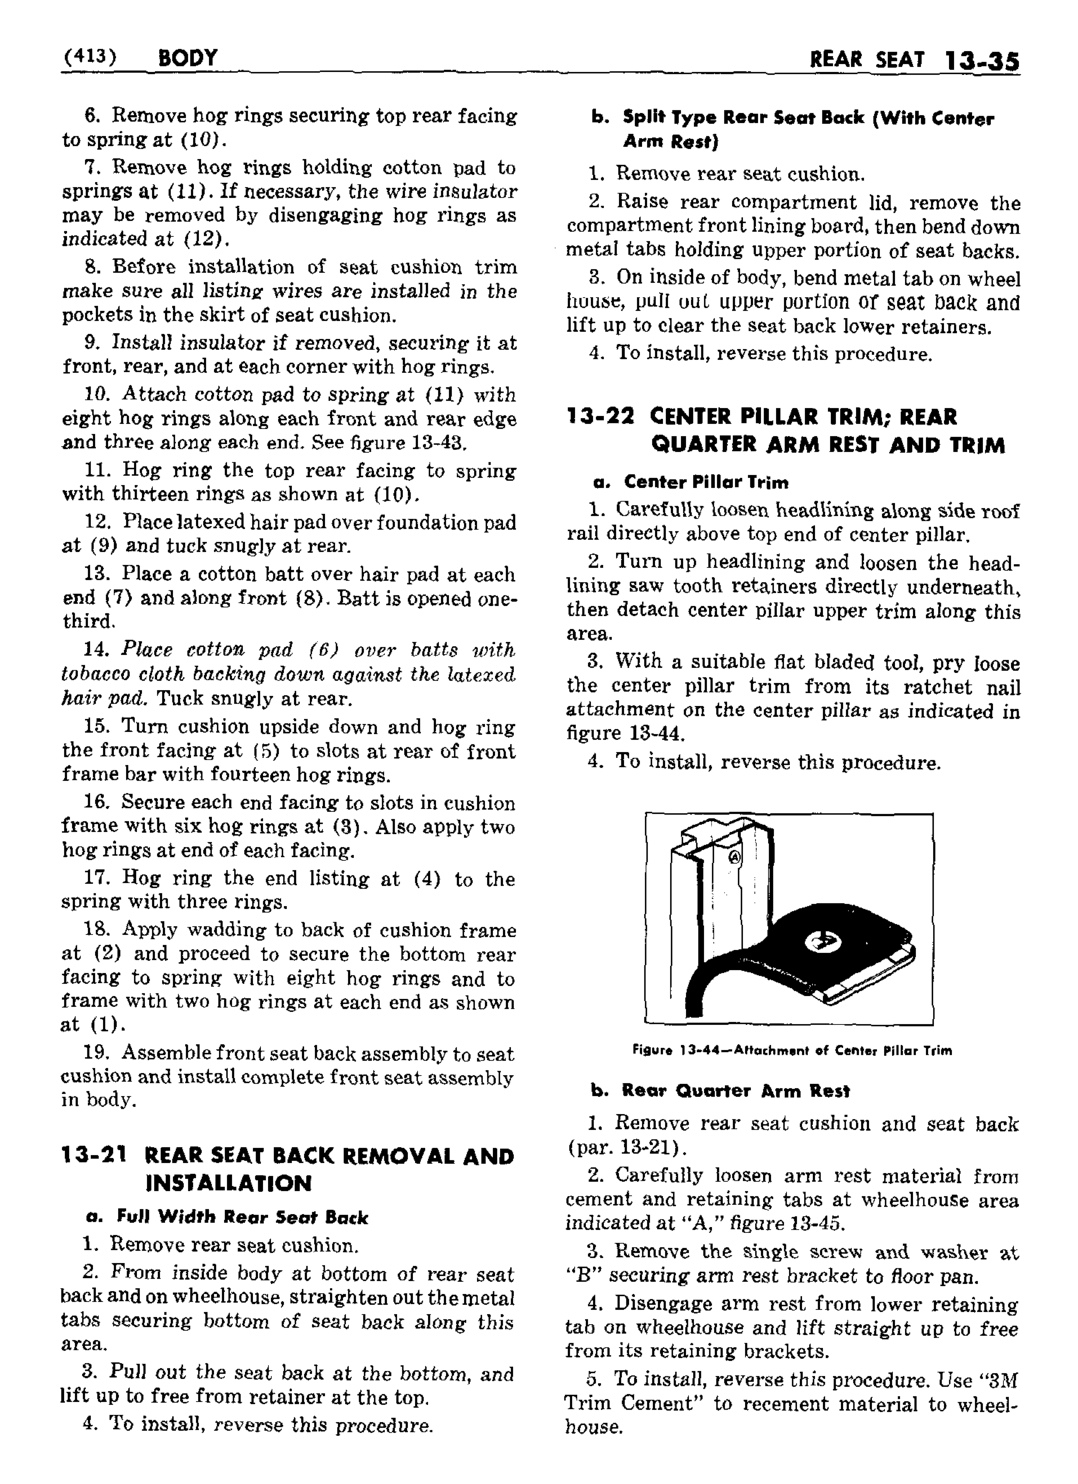 n_14 1950 Buick Shop Manual - Body-035-035.jpg